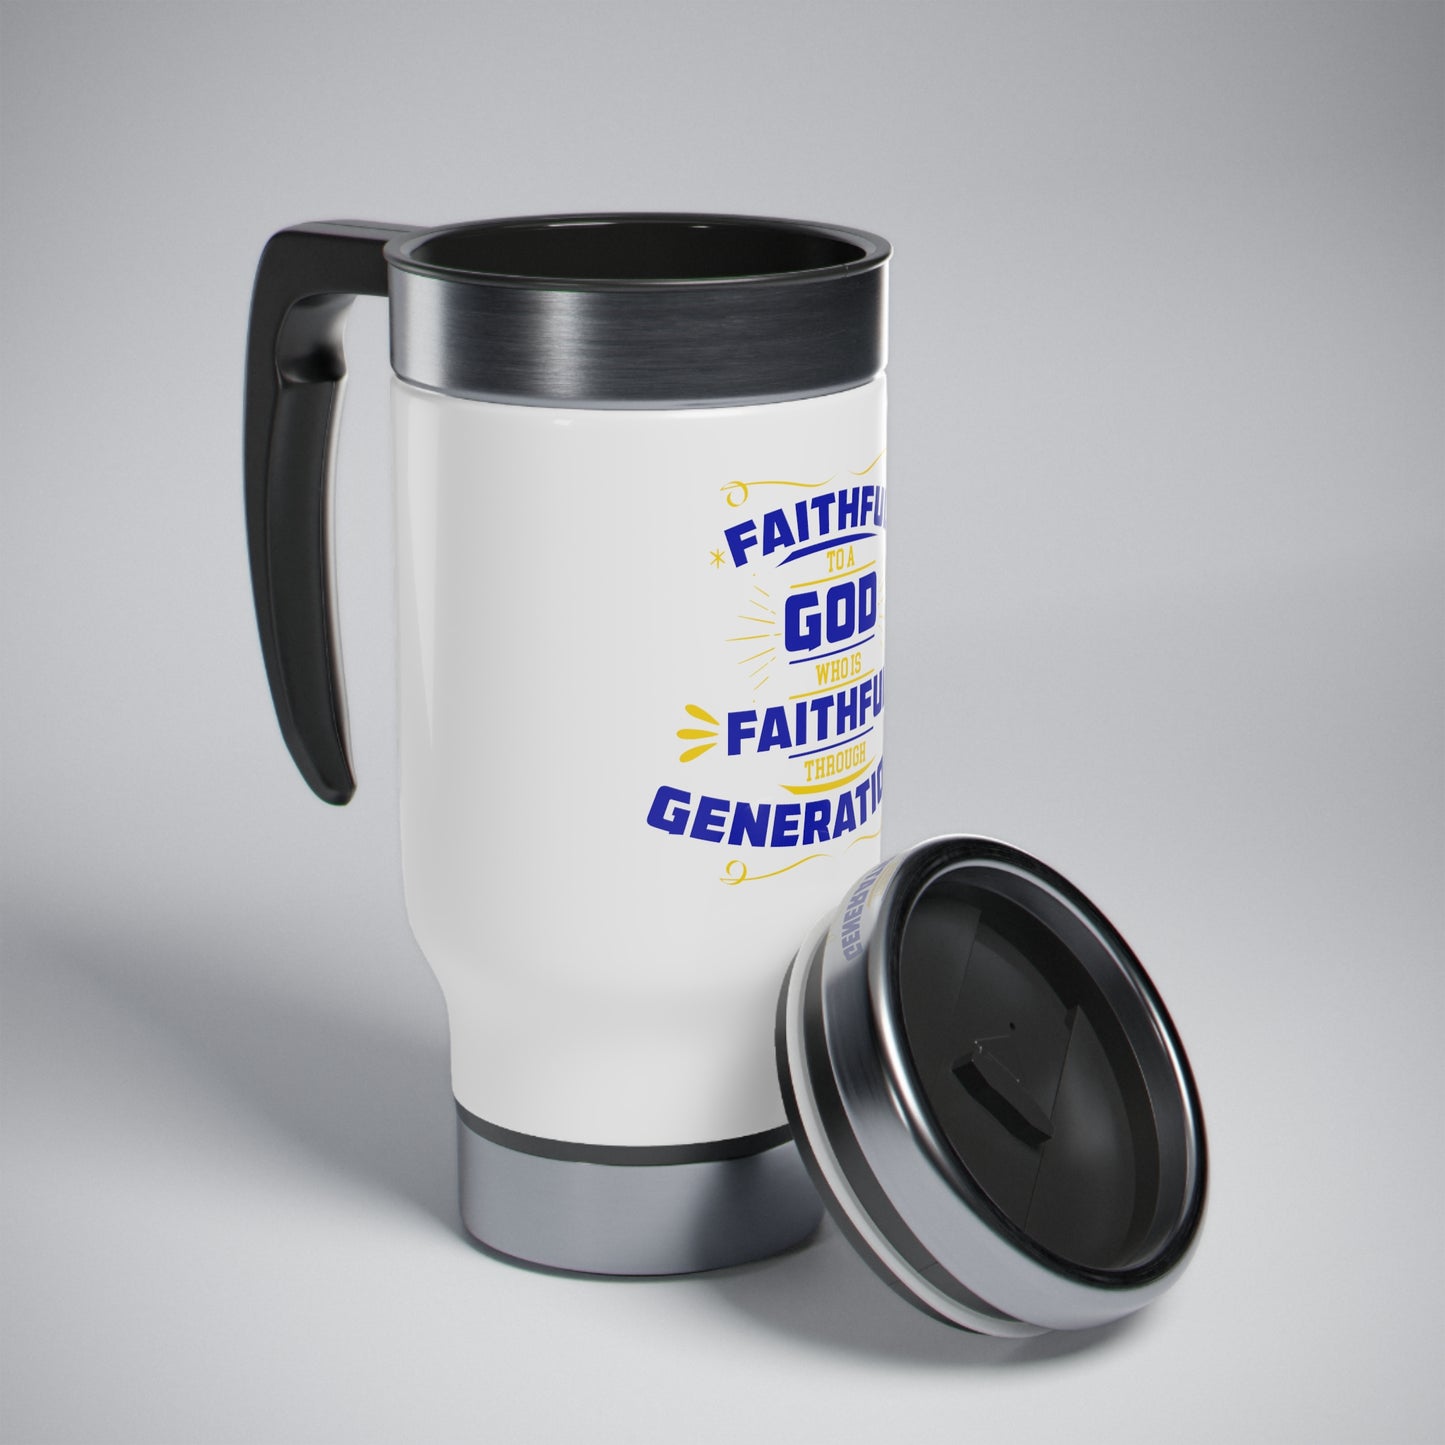 Faithful To A God Who Is Faithful Through Generations (2) Travel Mug with Handle, 14oz